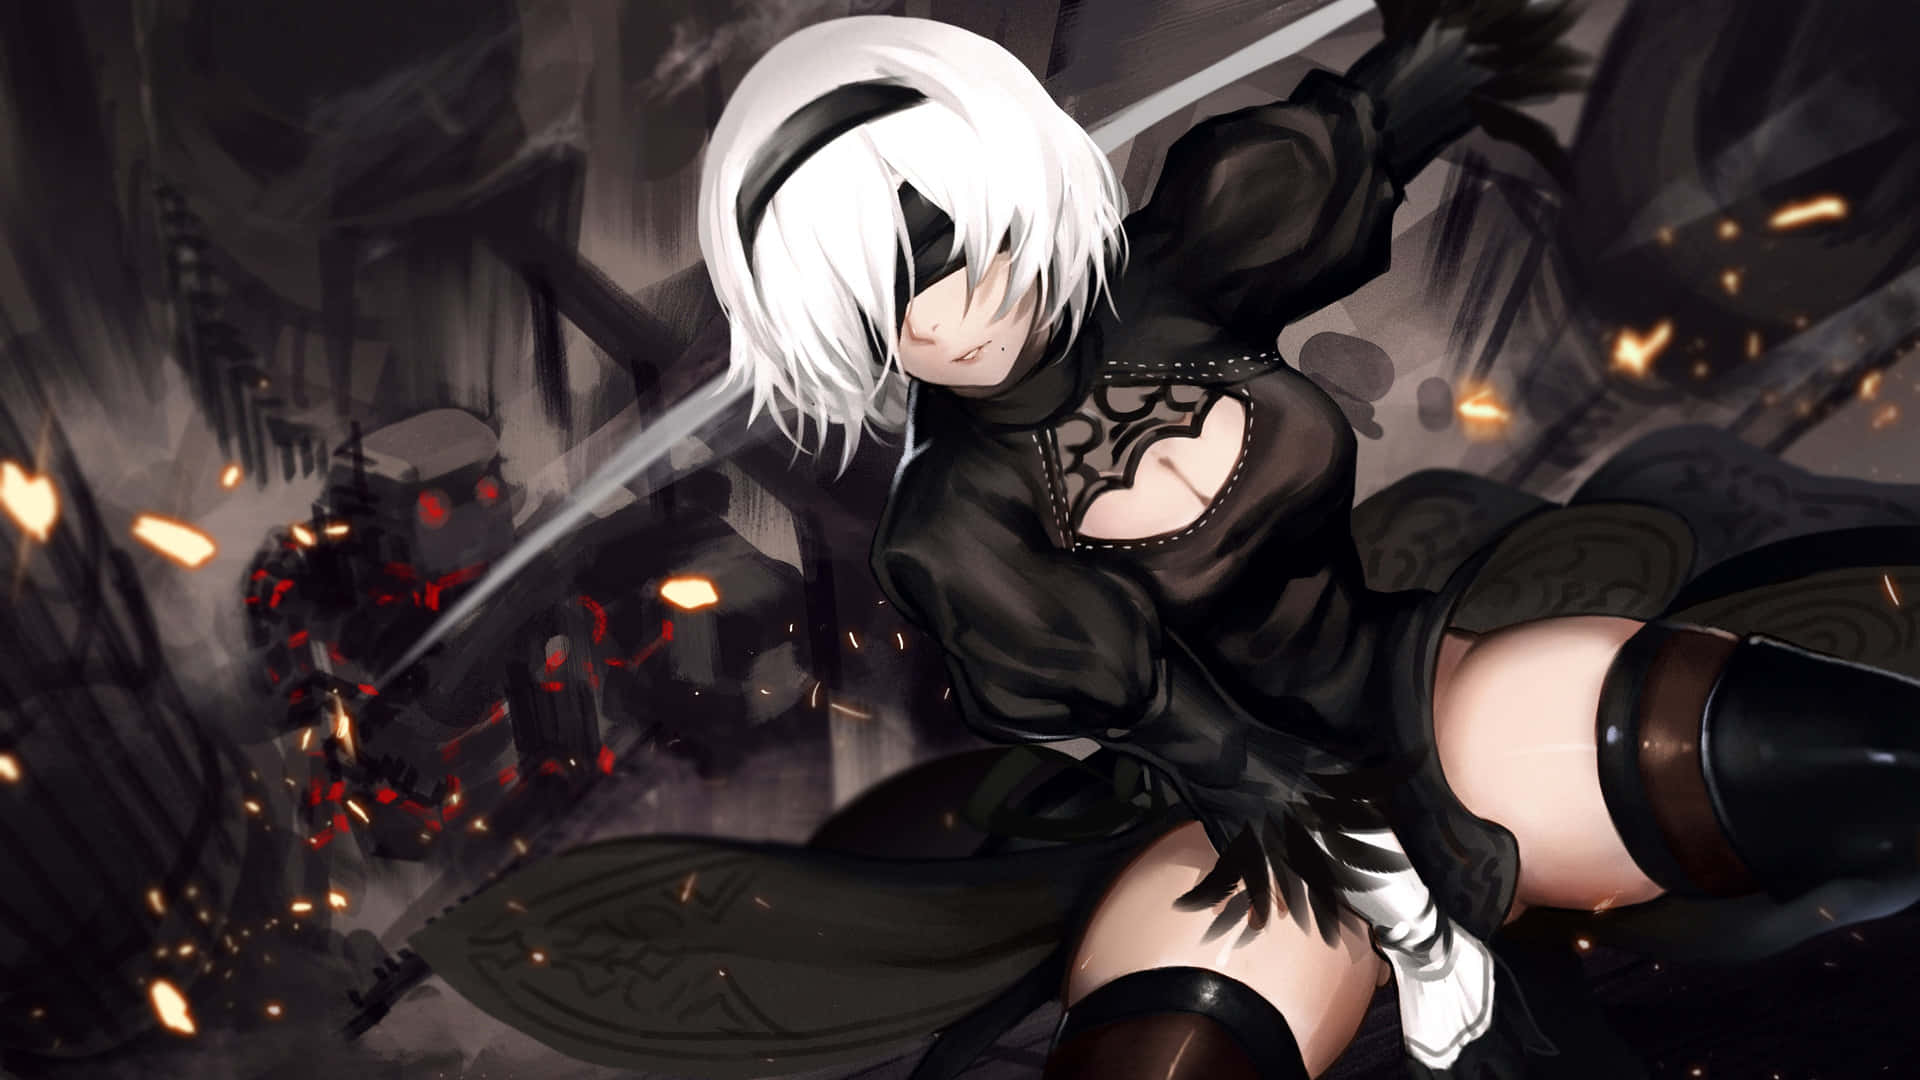 A White Anime Girl With A Sword